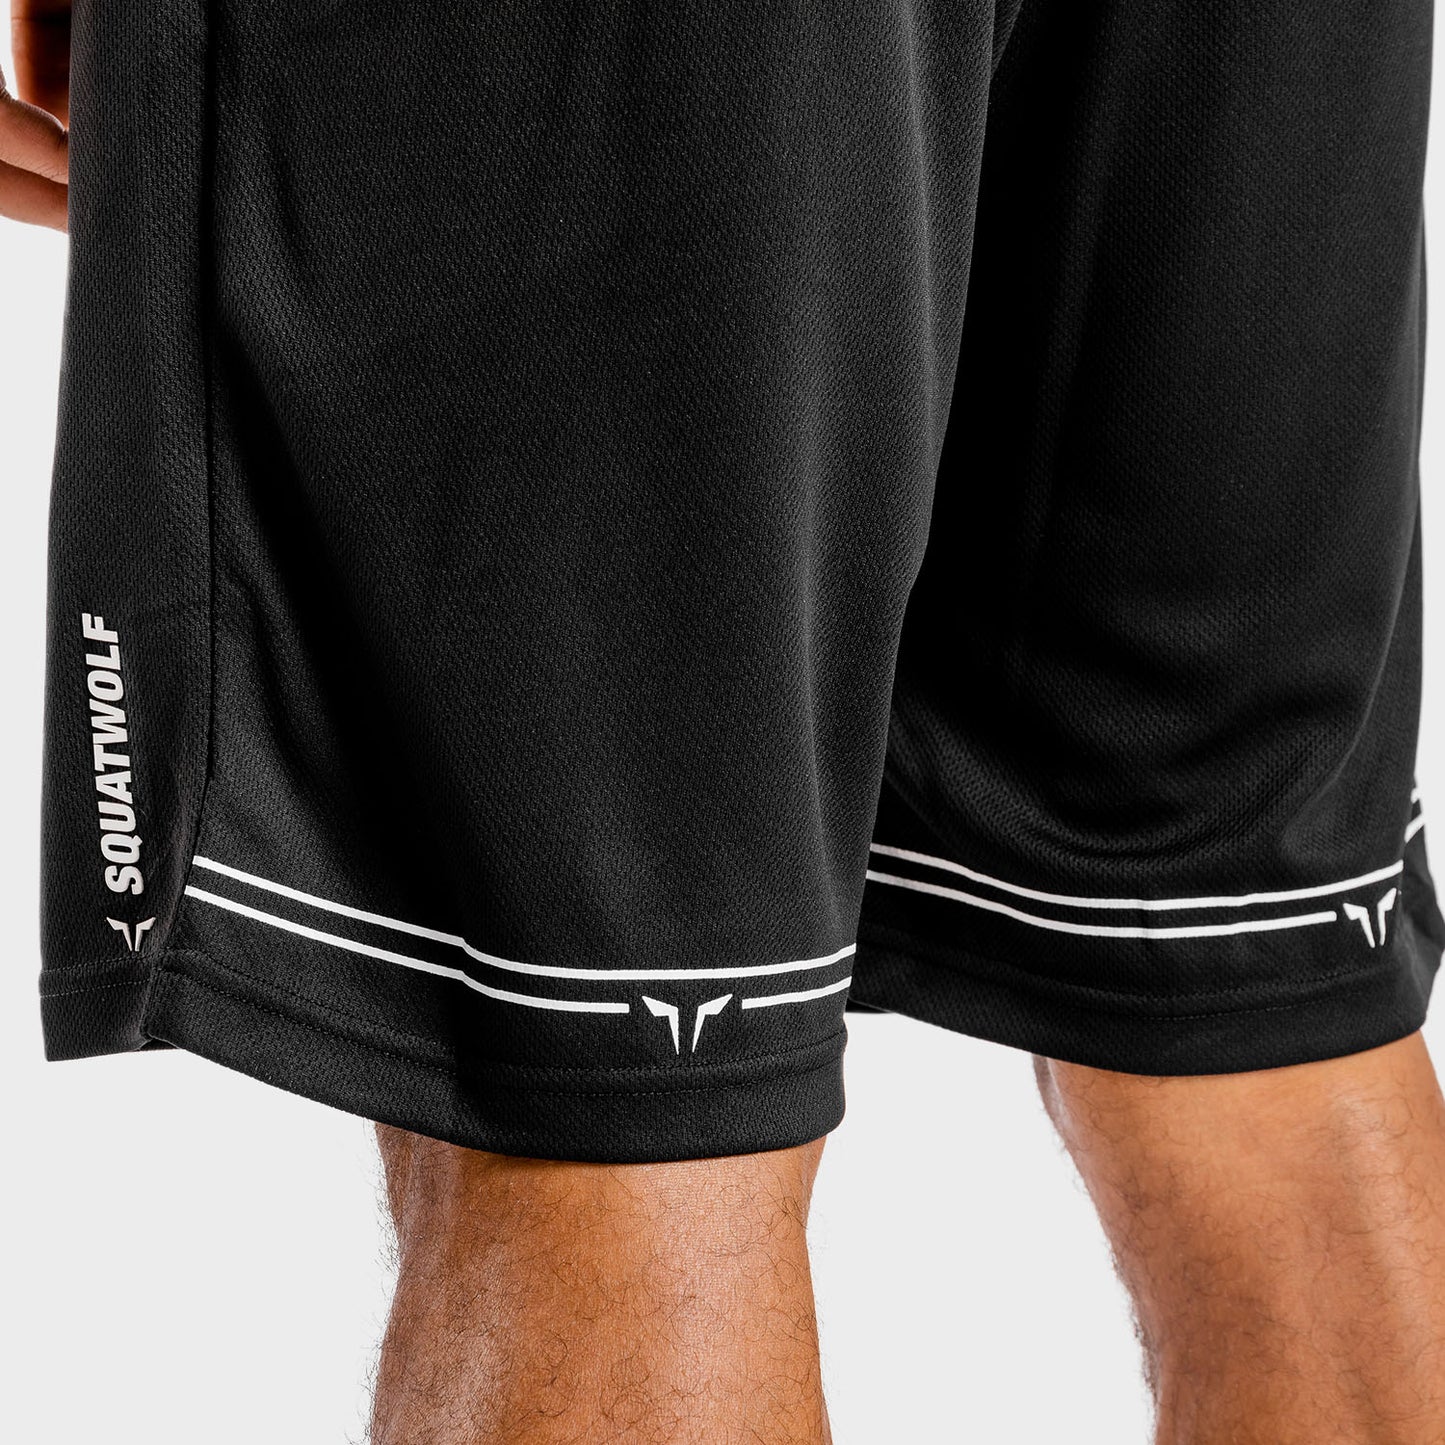 squatwolf-workout-short-for-men-flux-basketball-shorts-black-gym-wear